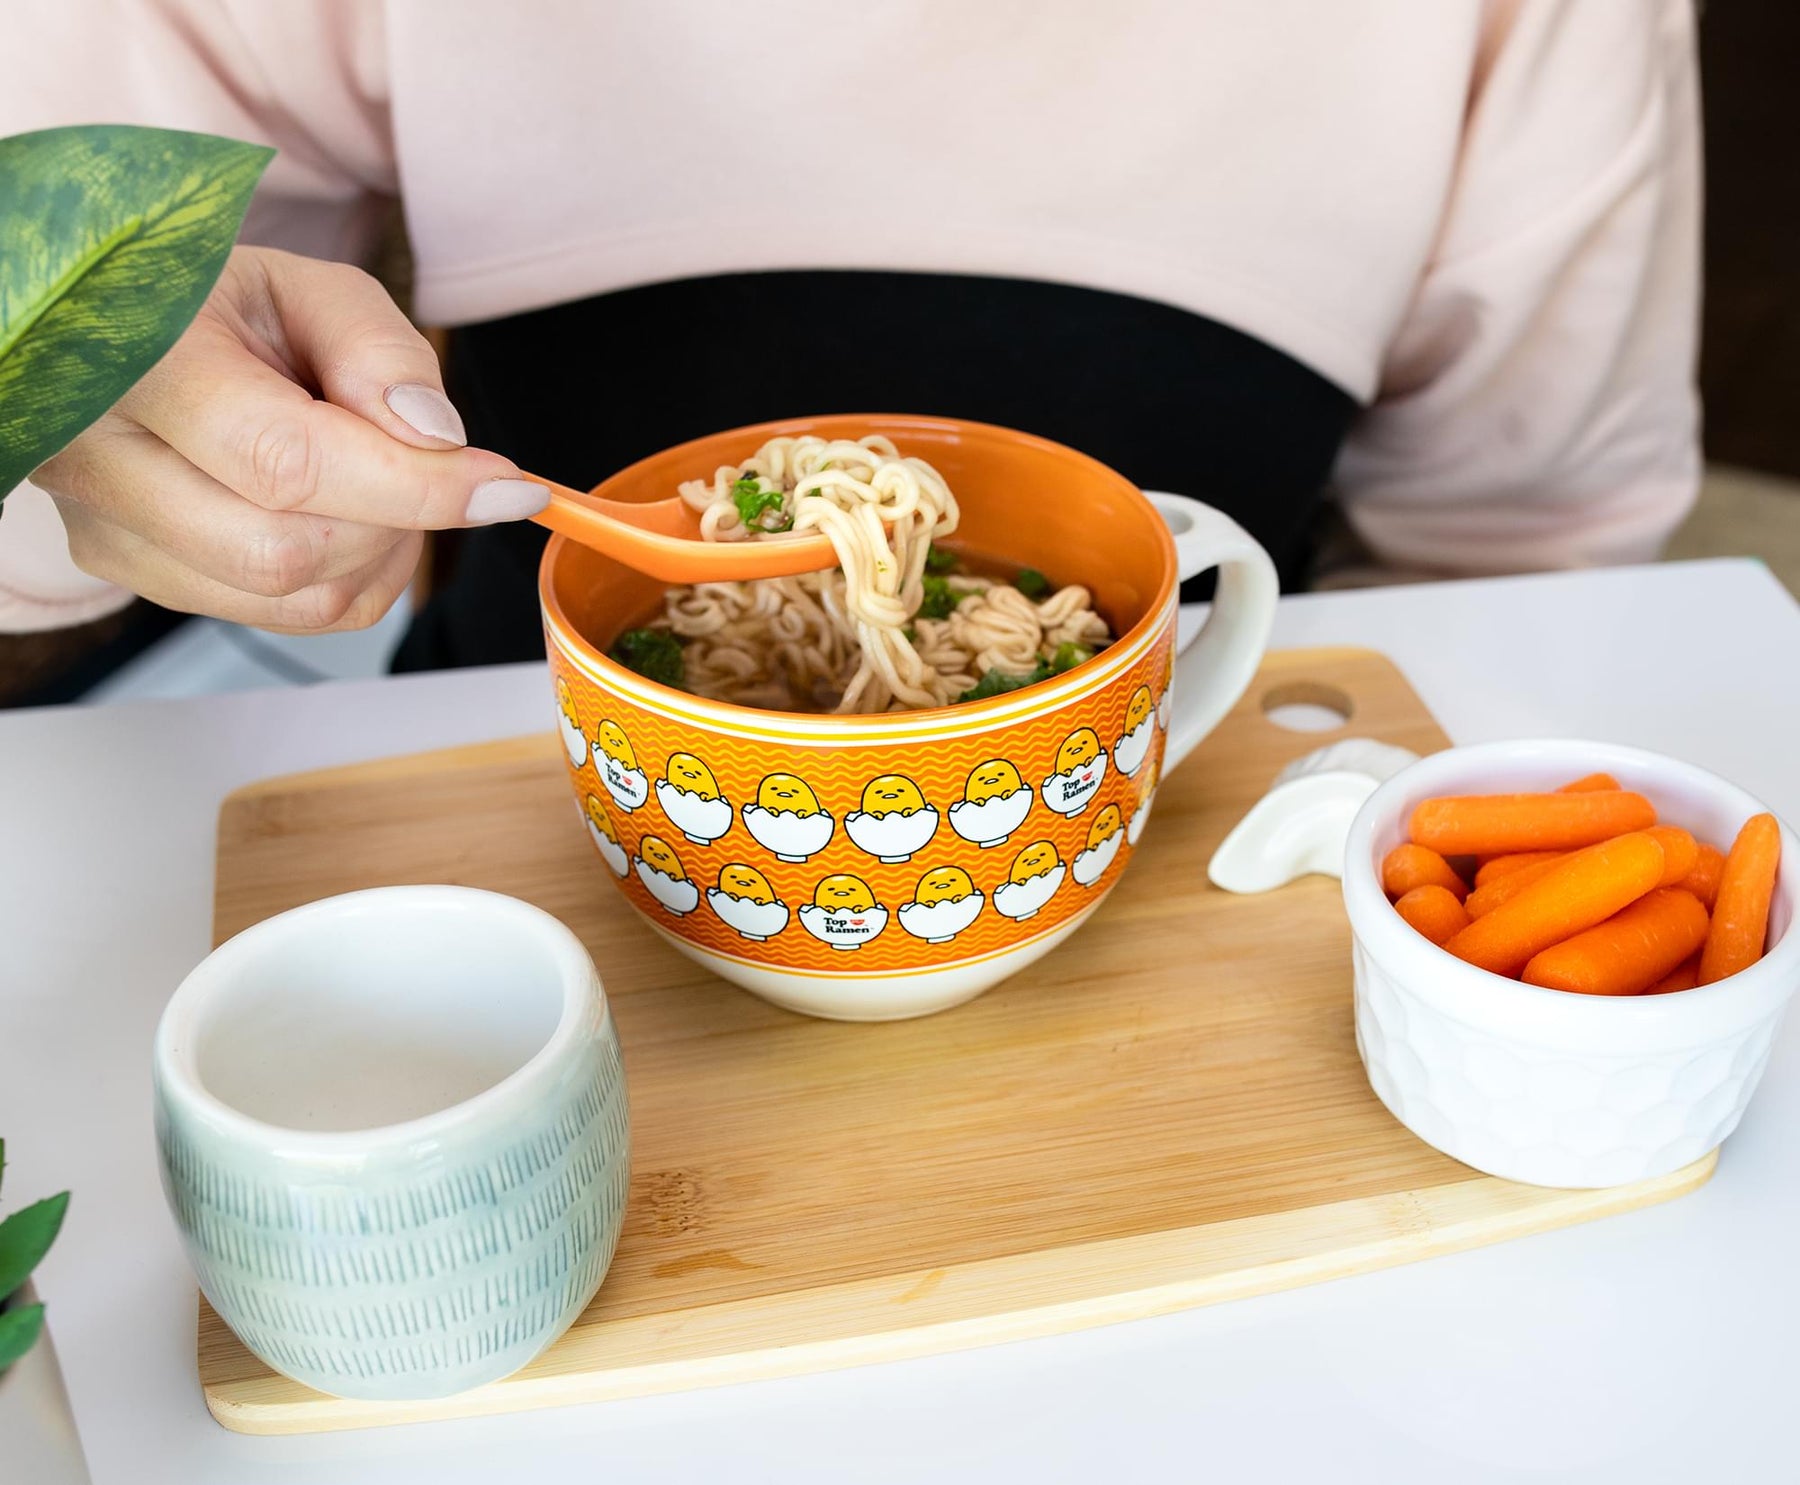 Sanrio Gudetama x Nissin Top Ramen Ceramic Soup Mug with Spoon | Holds 24 Ounces